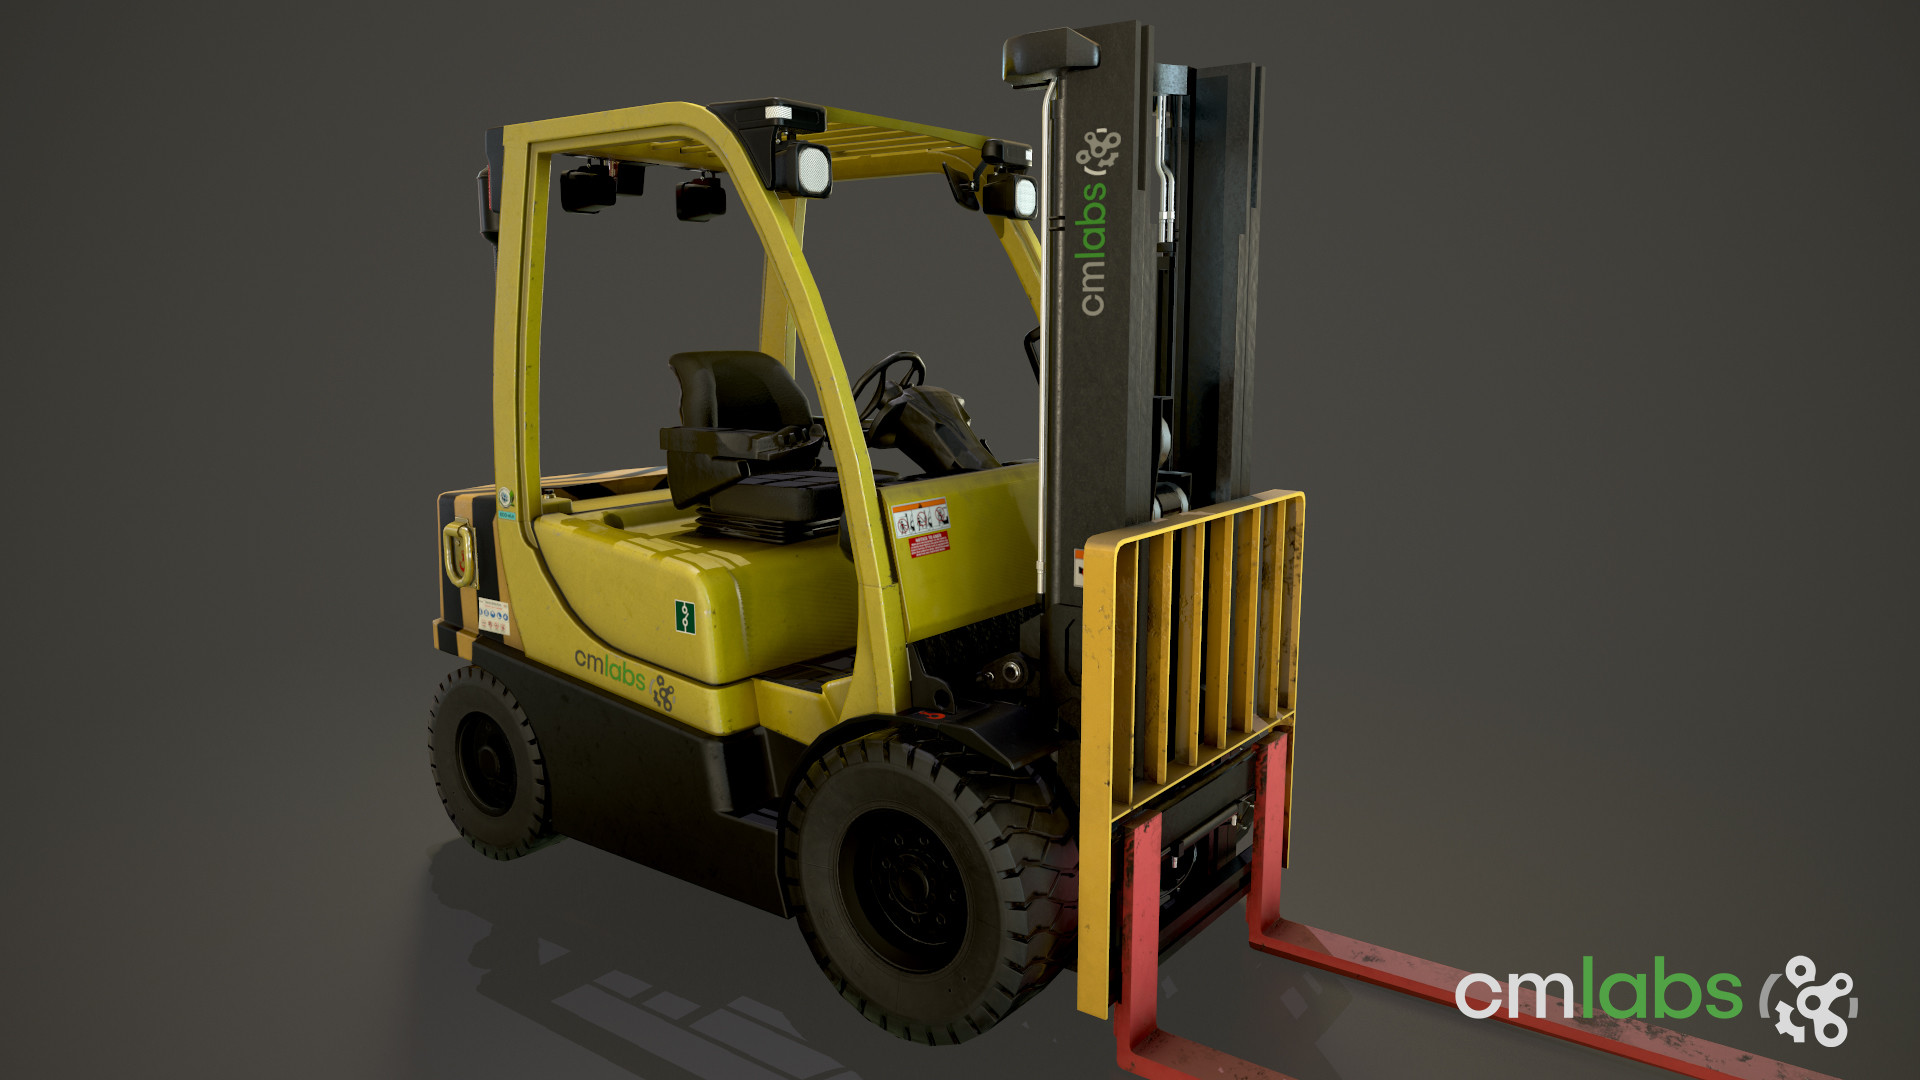 ArtStation - CM Labs Simulations - Forklift